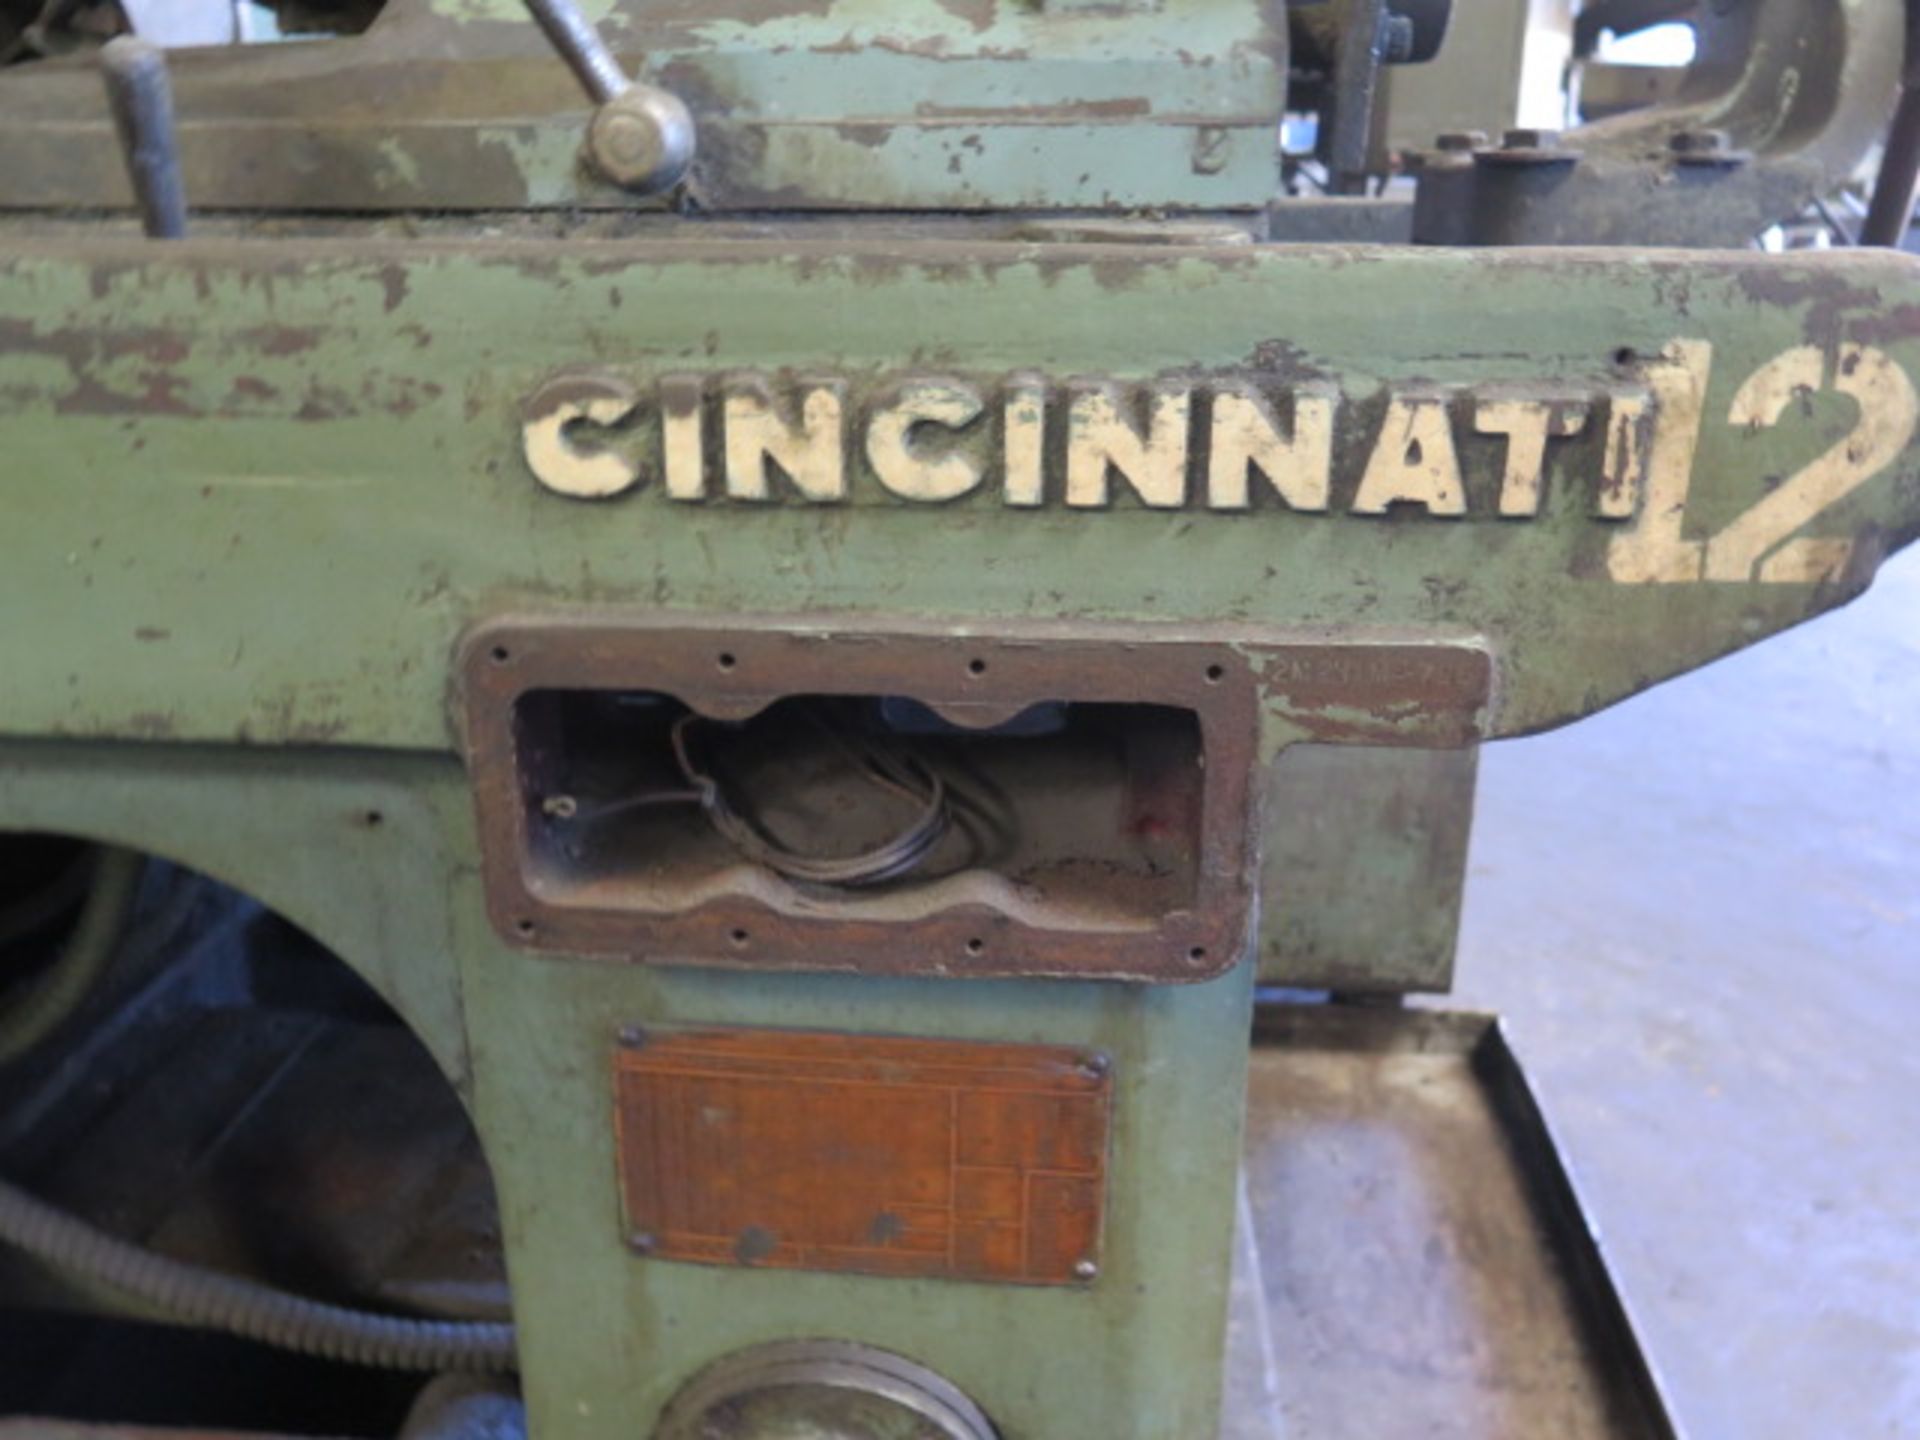 Cincinnati EA Centerless Grinding Machine s/n 2M2H1M-795 (PARTS MACHINE) (SOLD AS-IS - NO WARRANTY) - Image 7 of 7